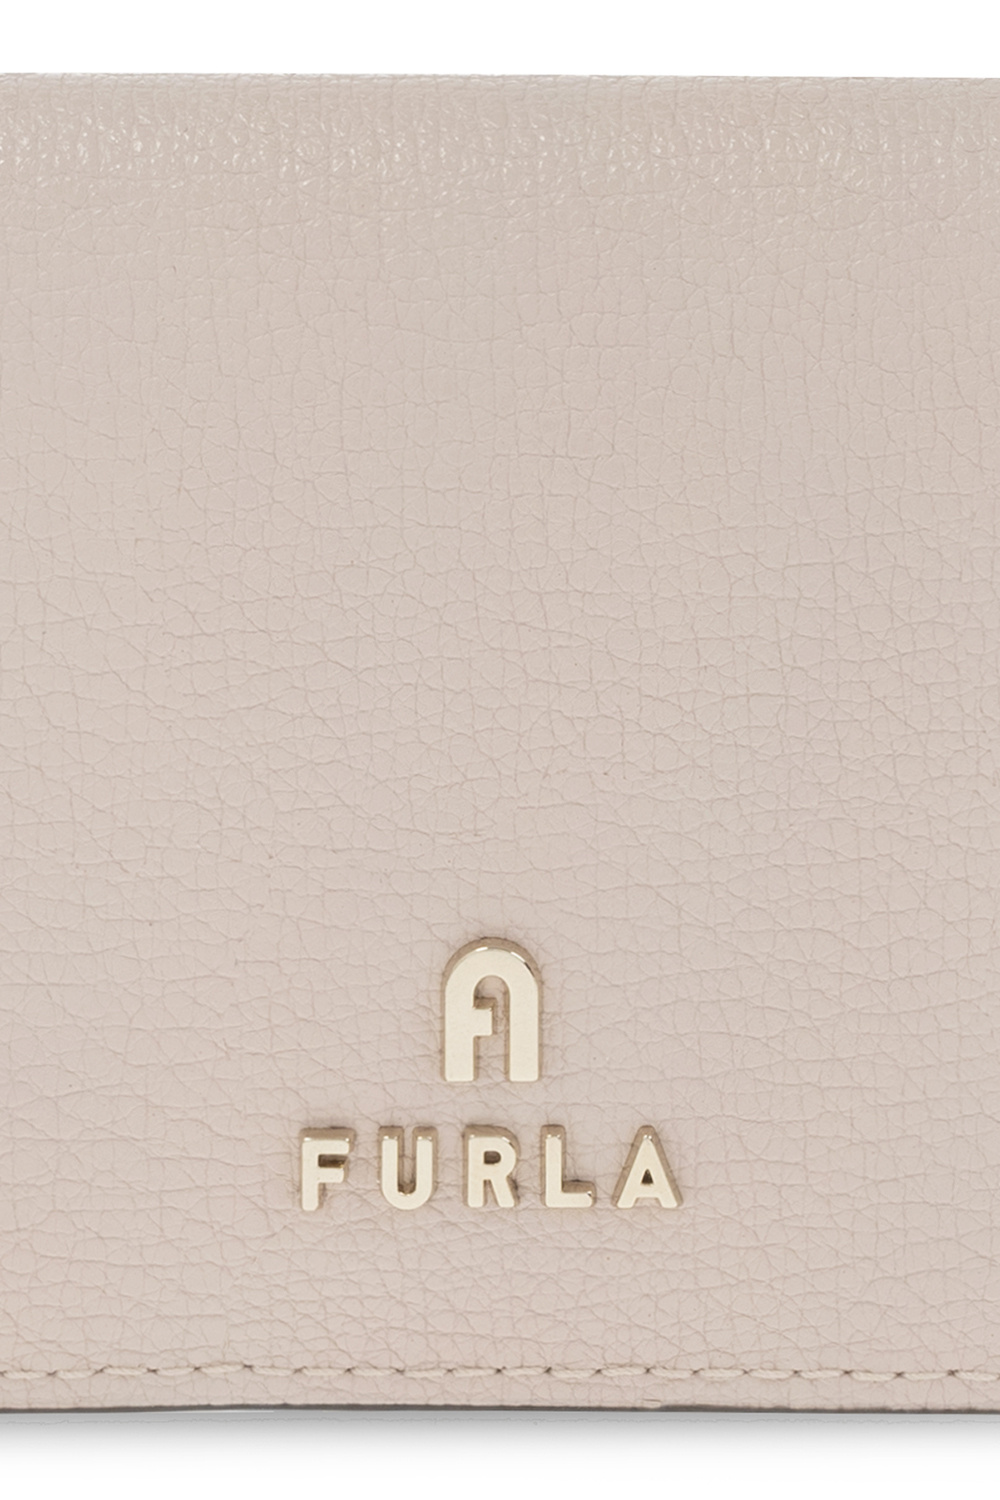 Furla ‘Magnolia’ card holder